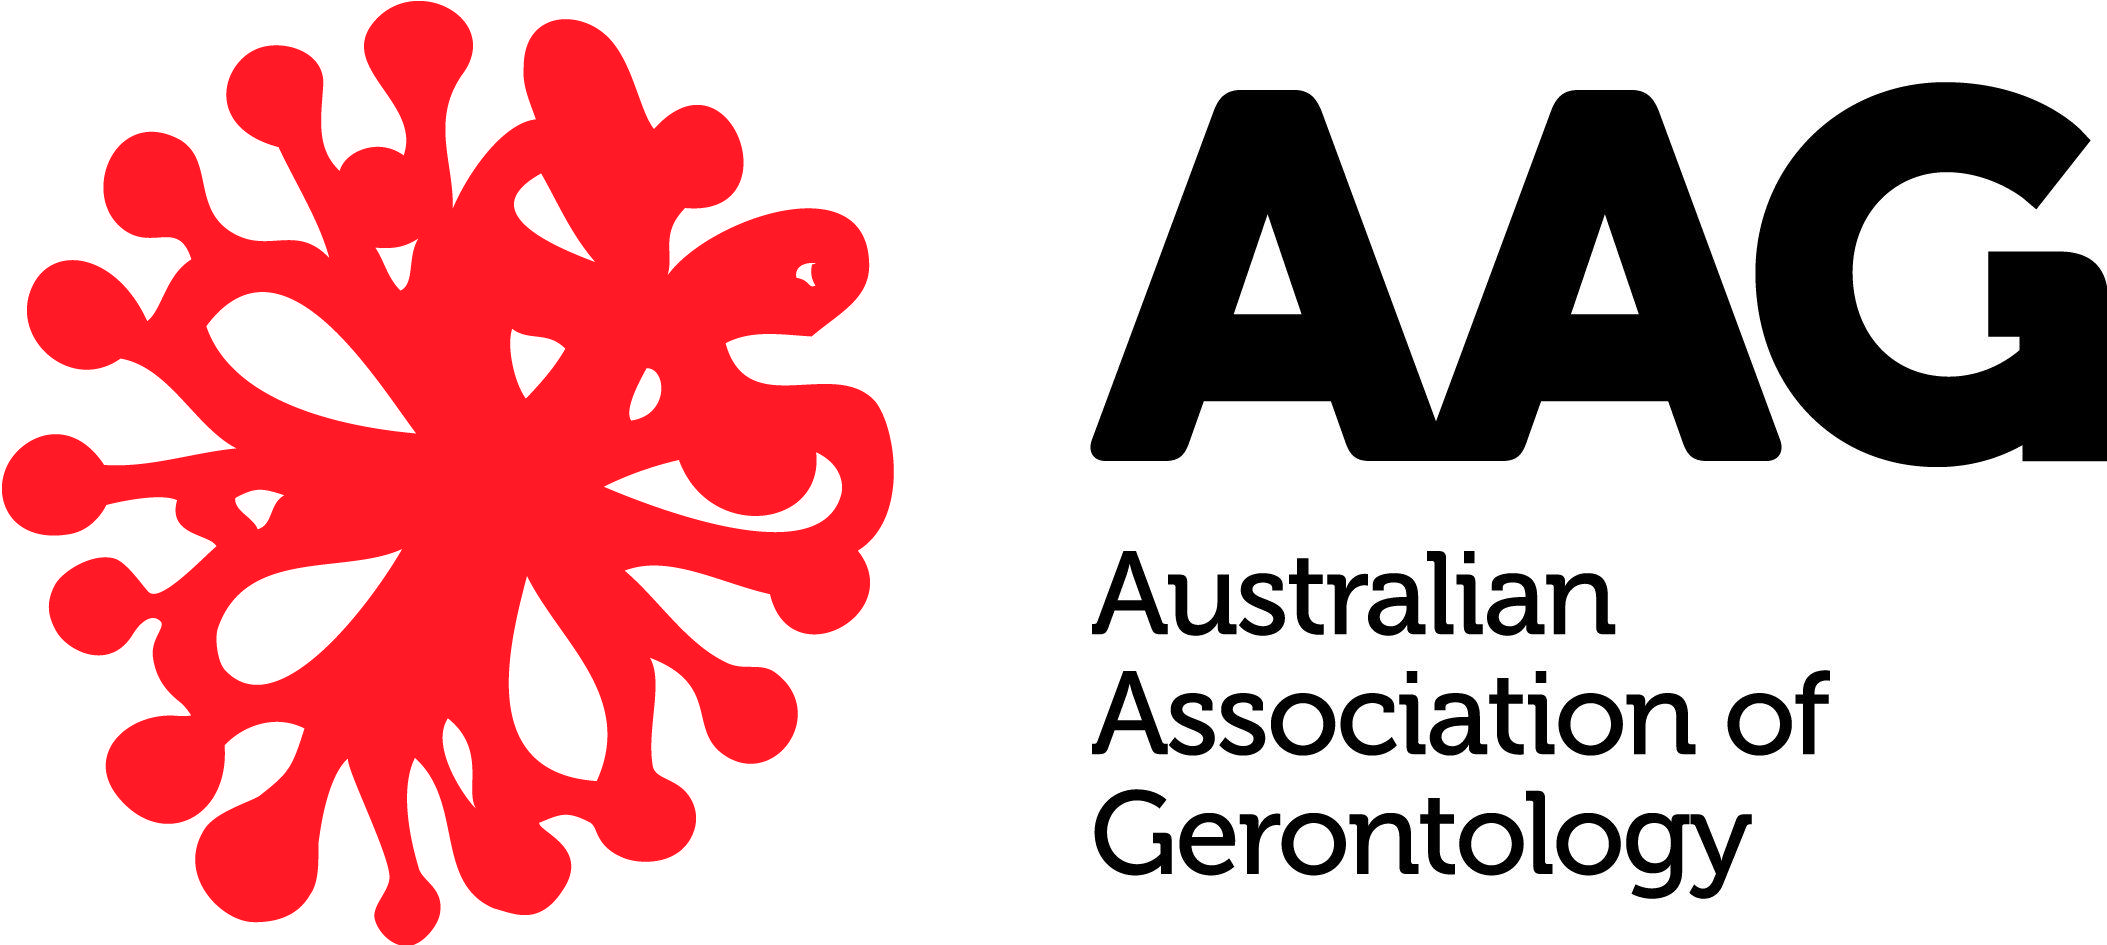 Aag Logo - Australian Association of Gerontology - Australian Association of ...